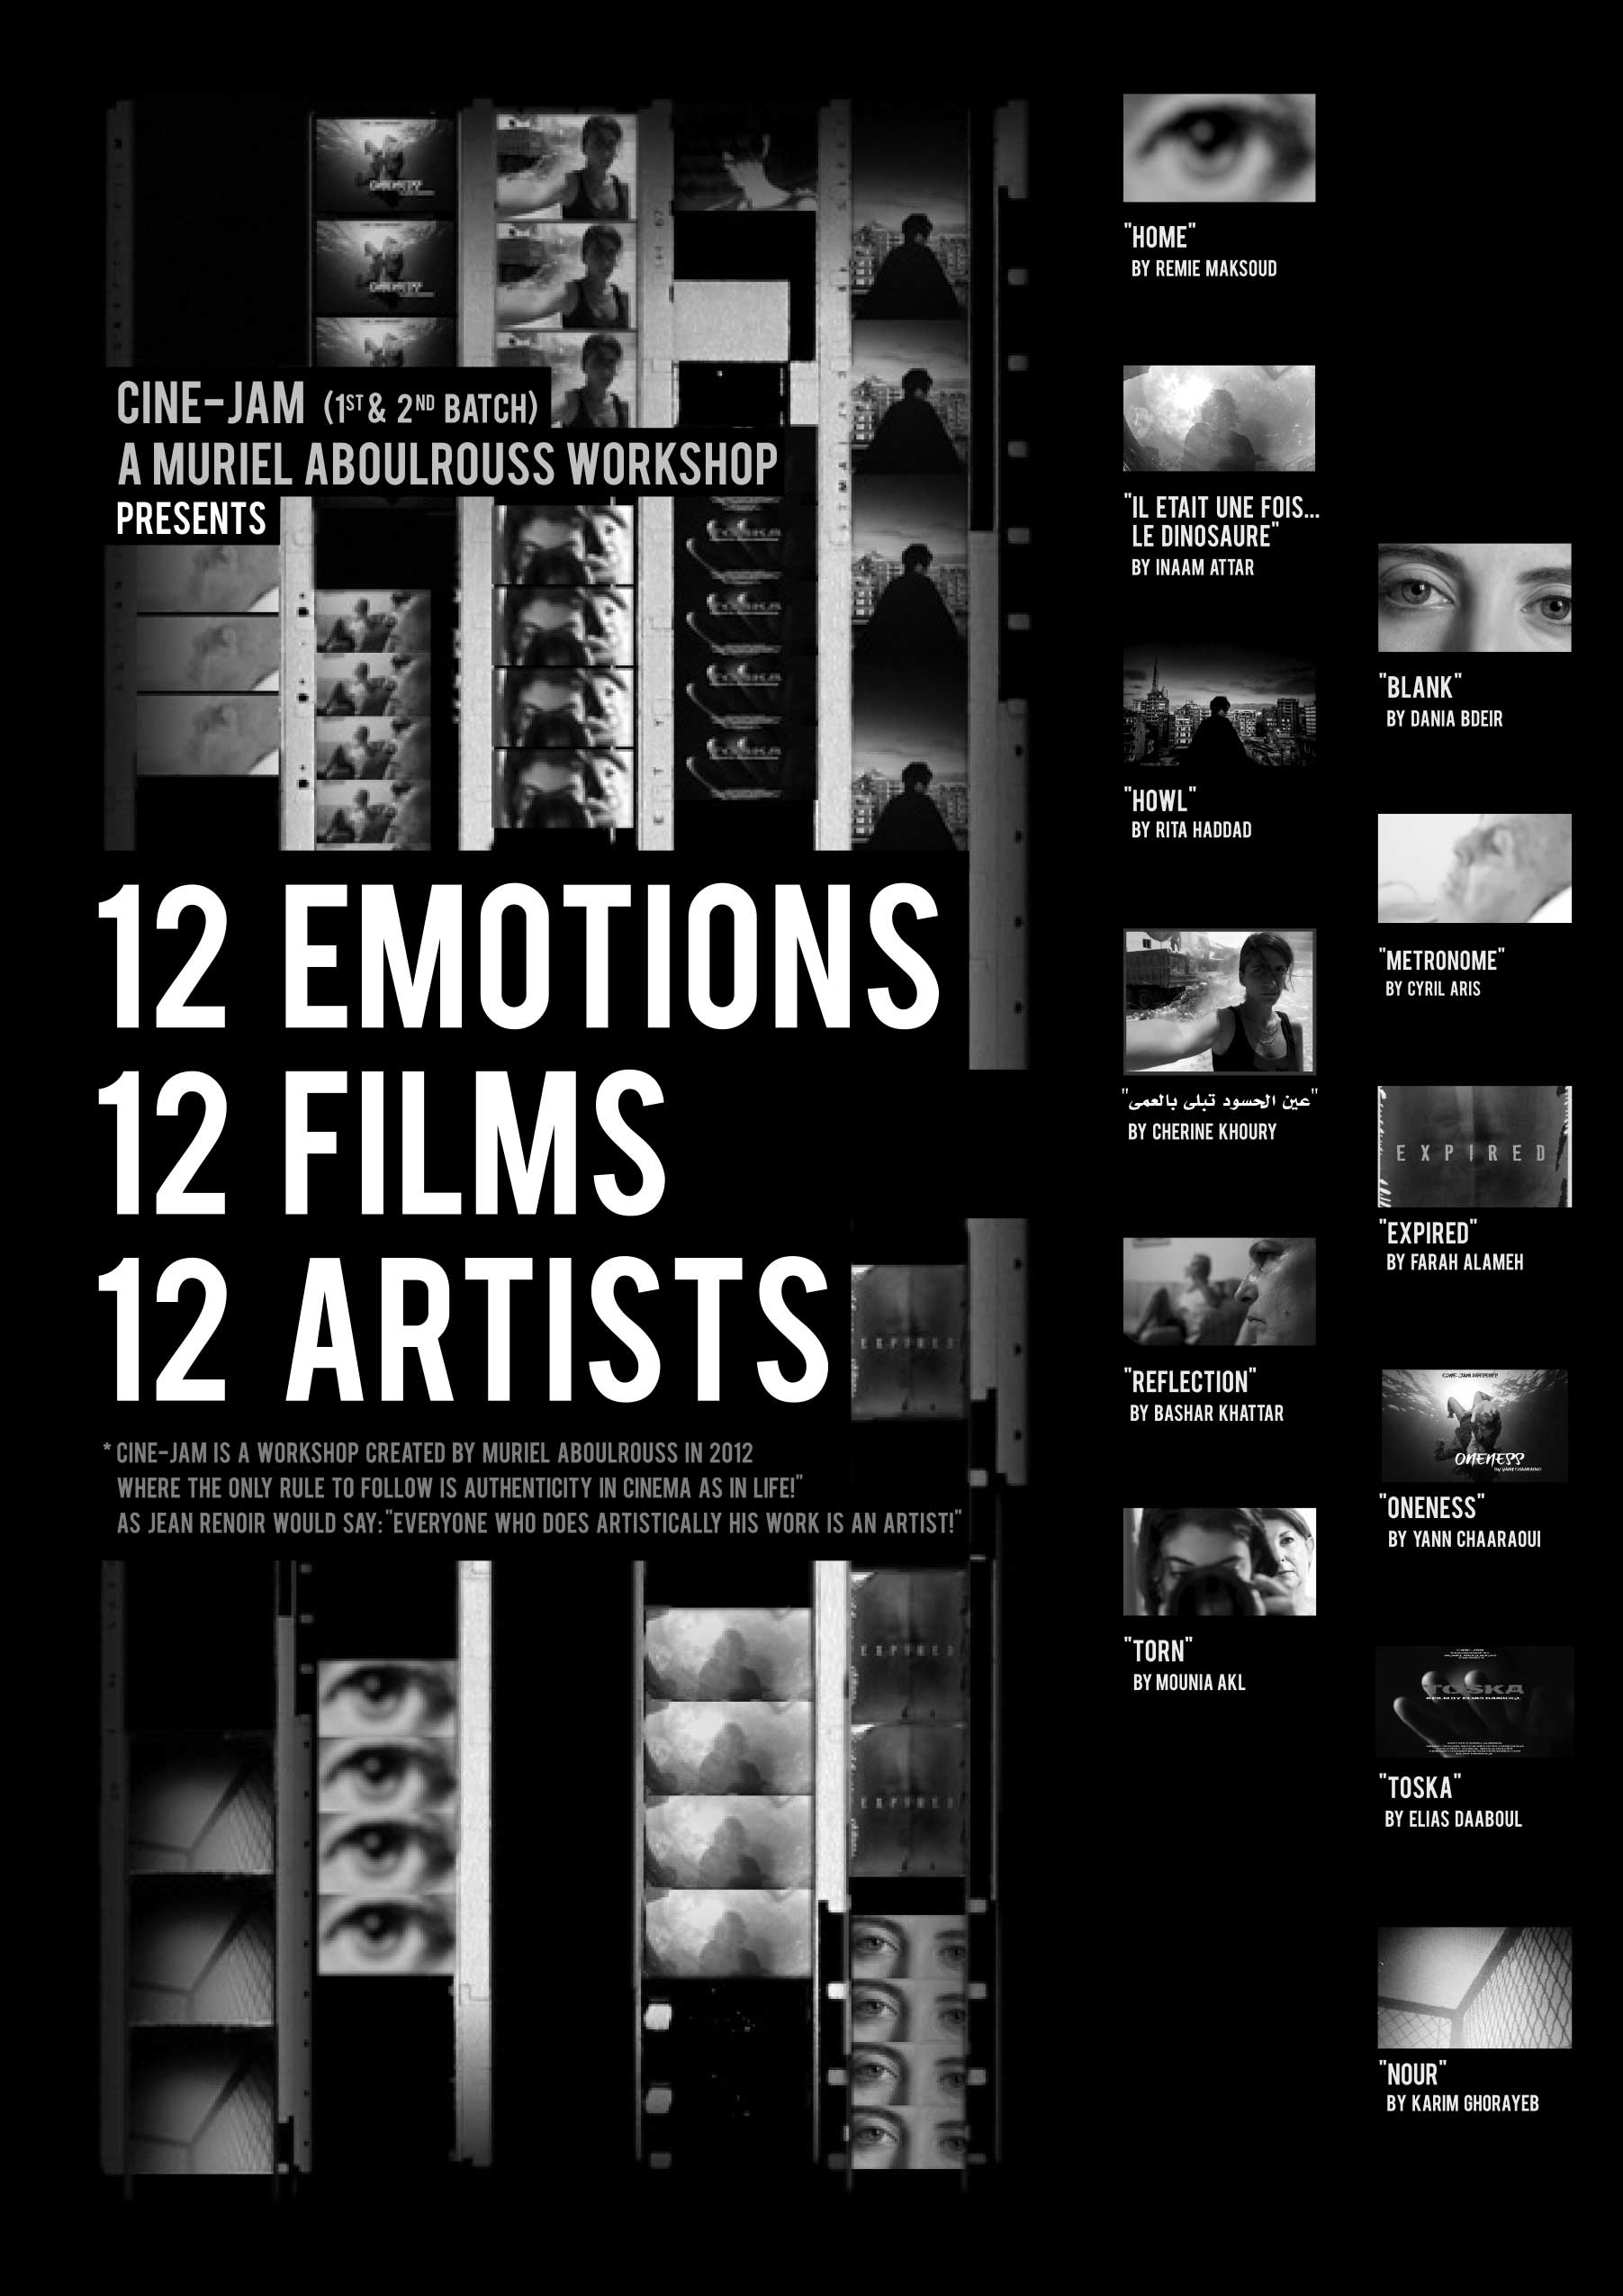 cine-jam-1&2-batch-poster